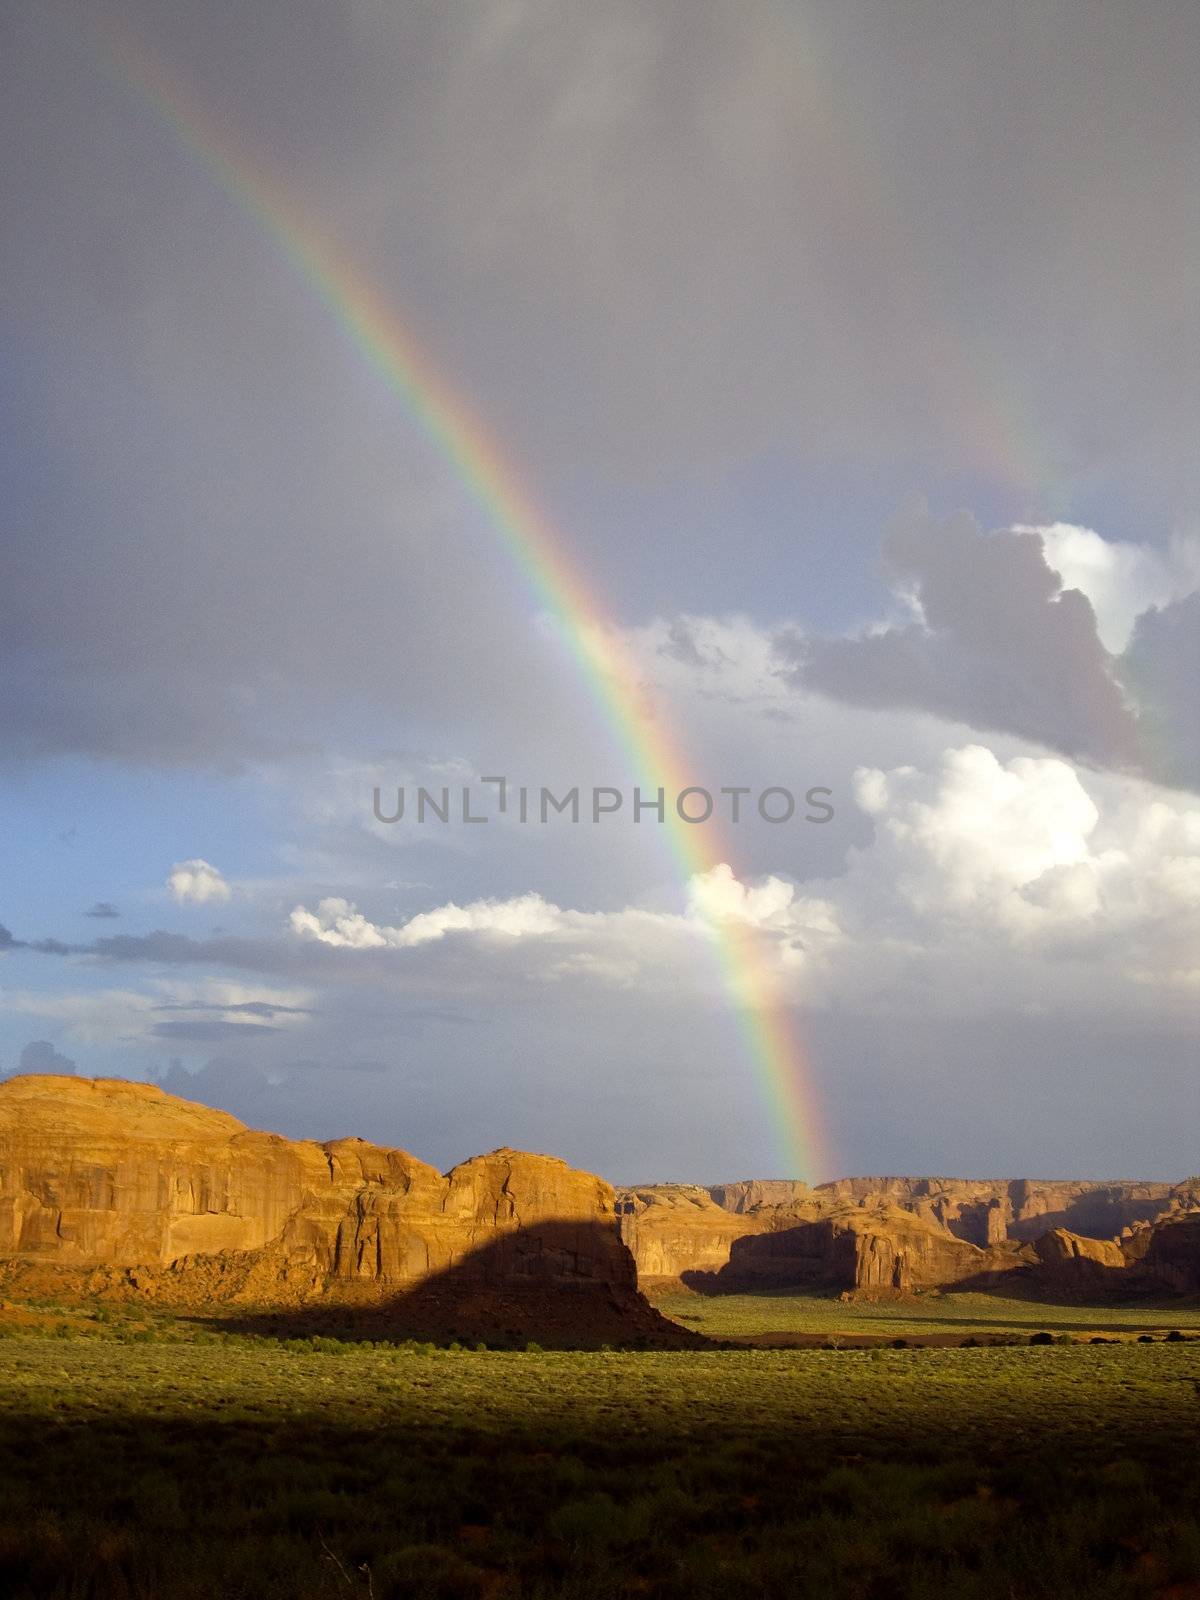 Double rainbows appear after sudden desert storm